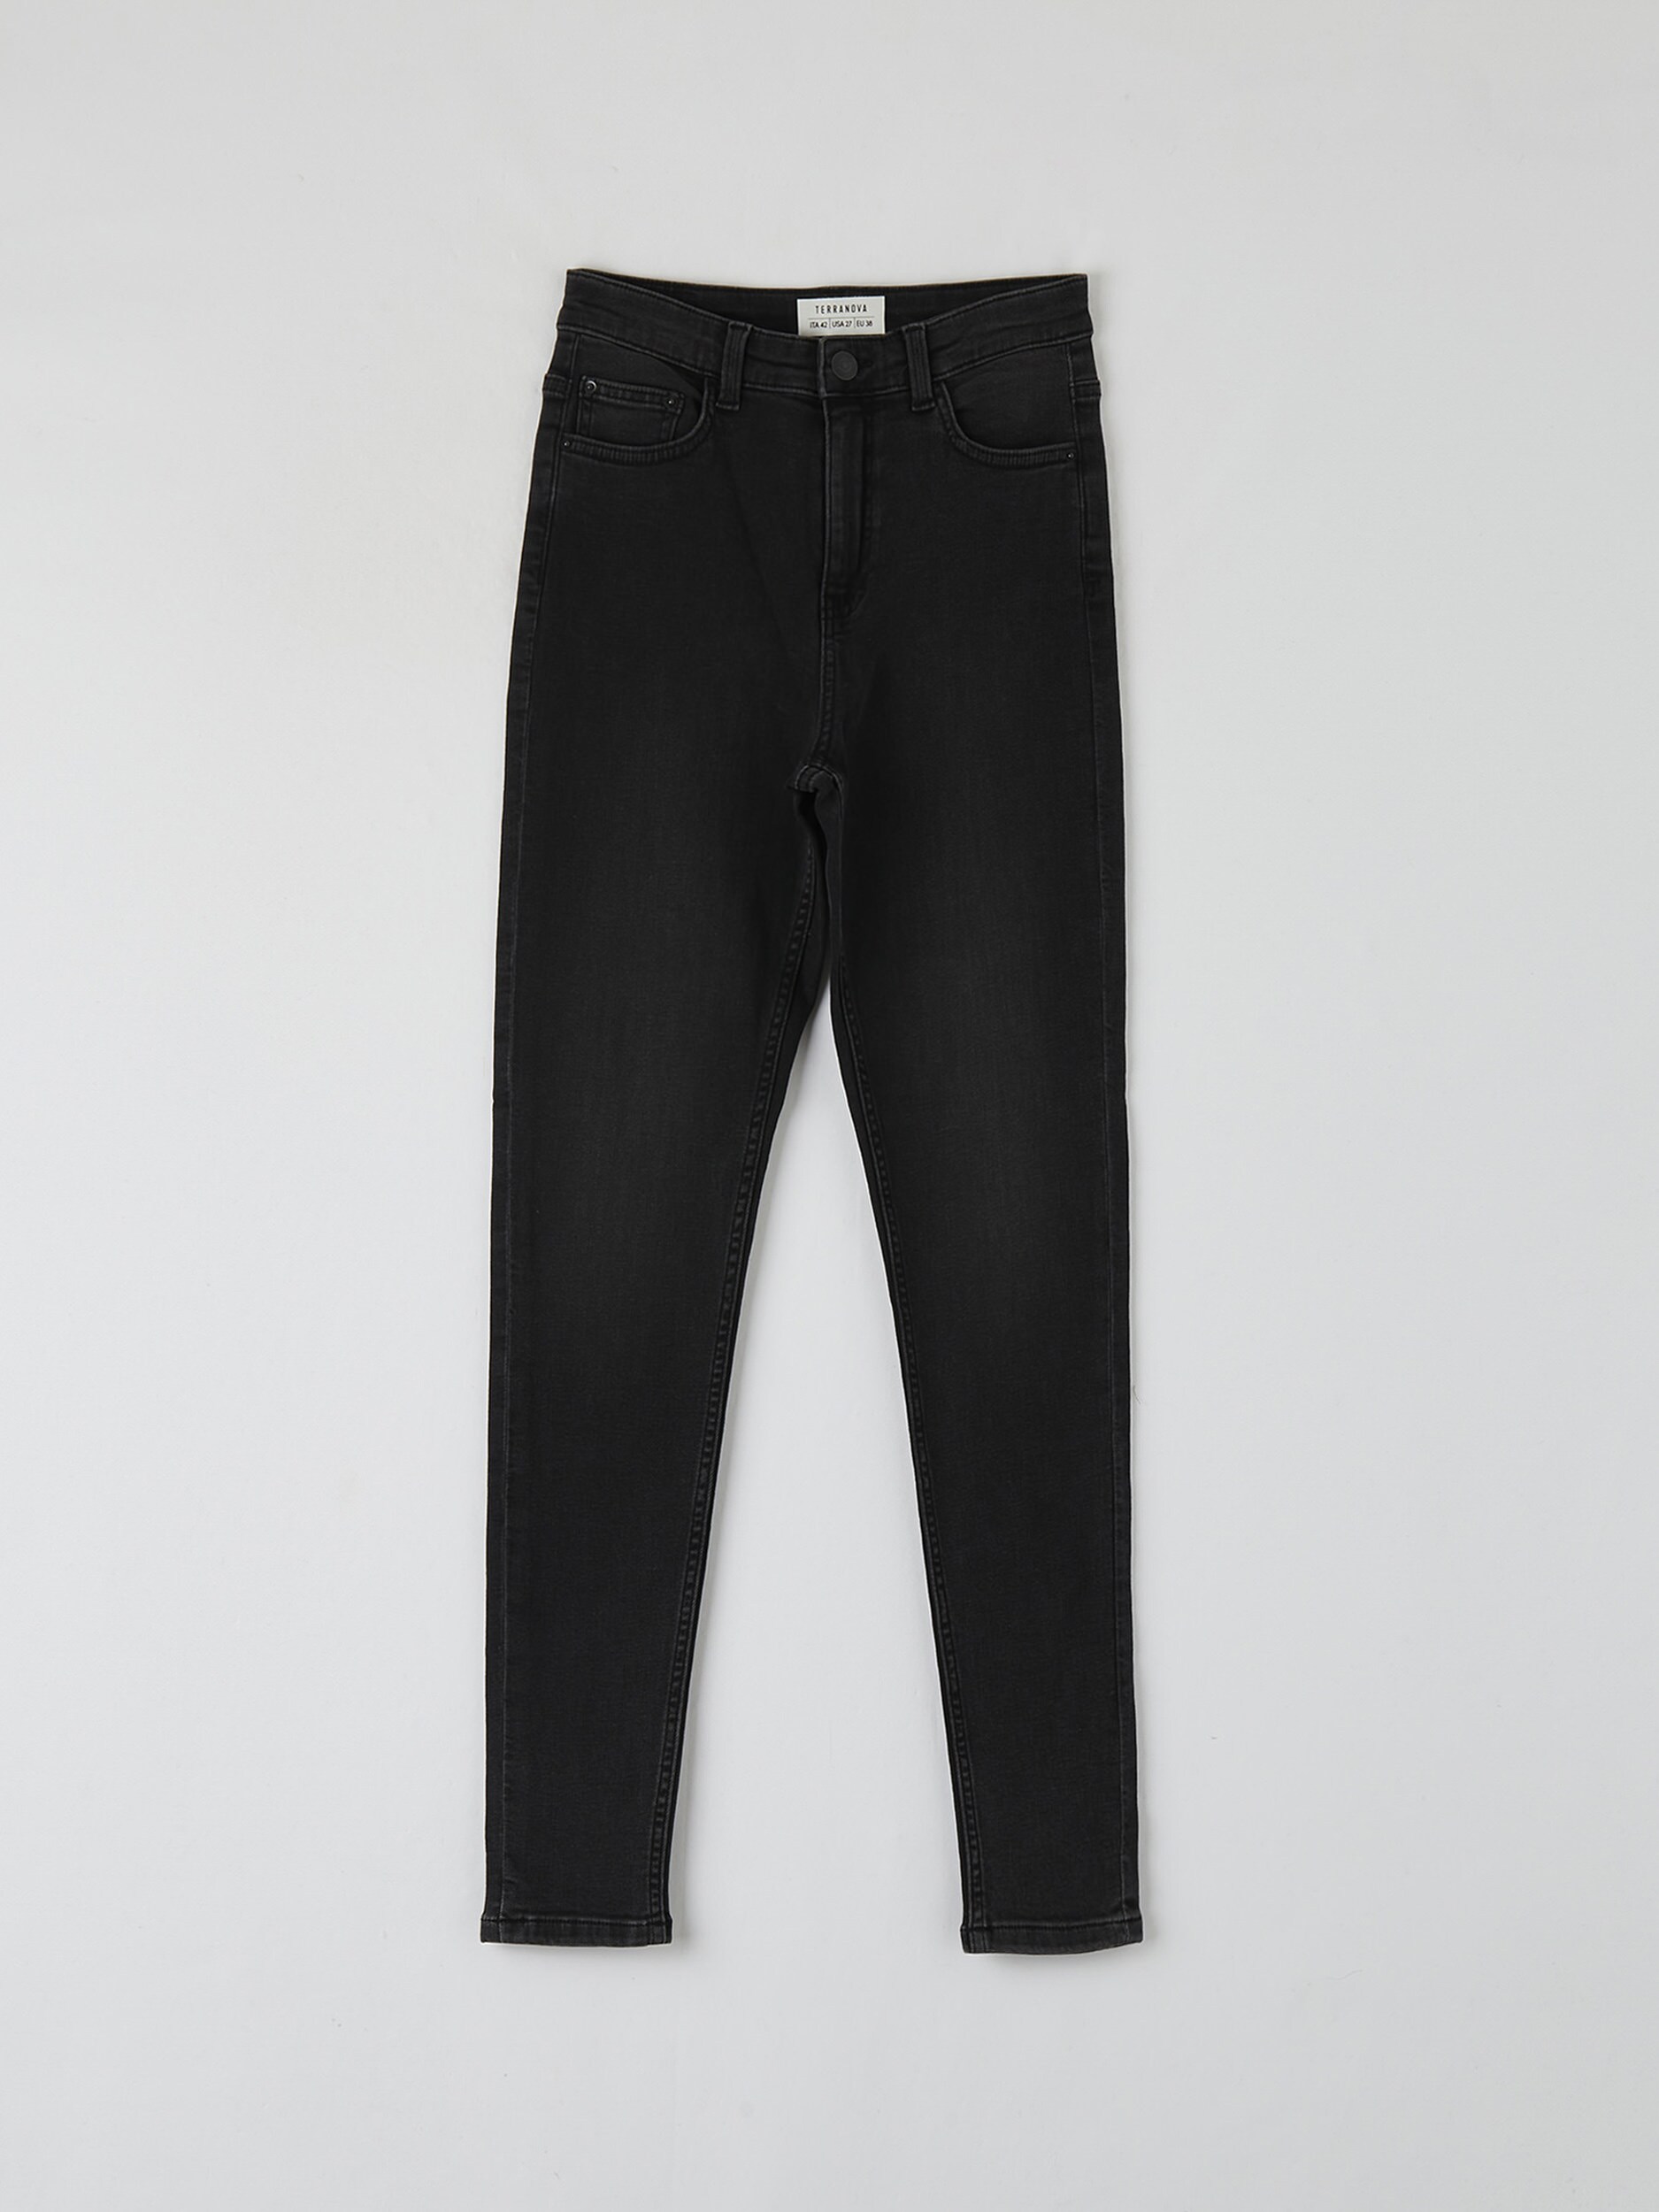 black high waisted black jeans